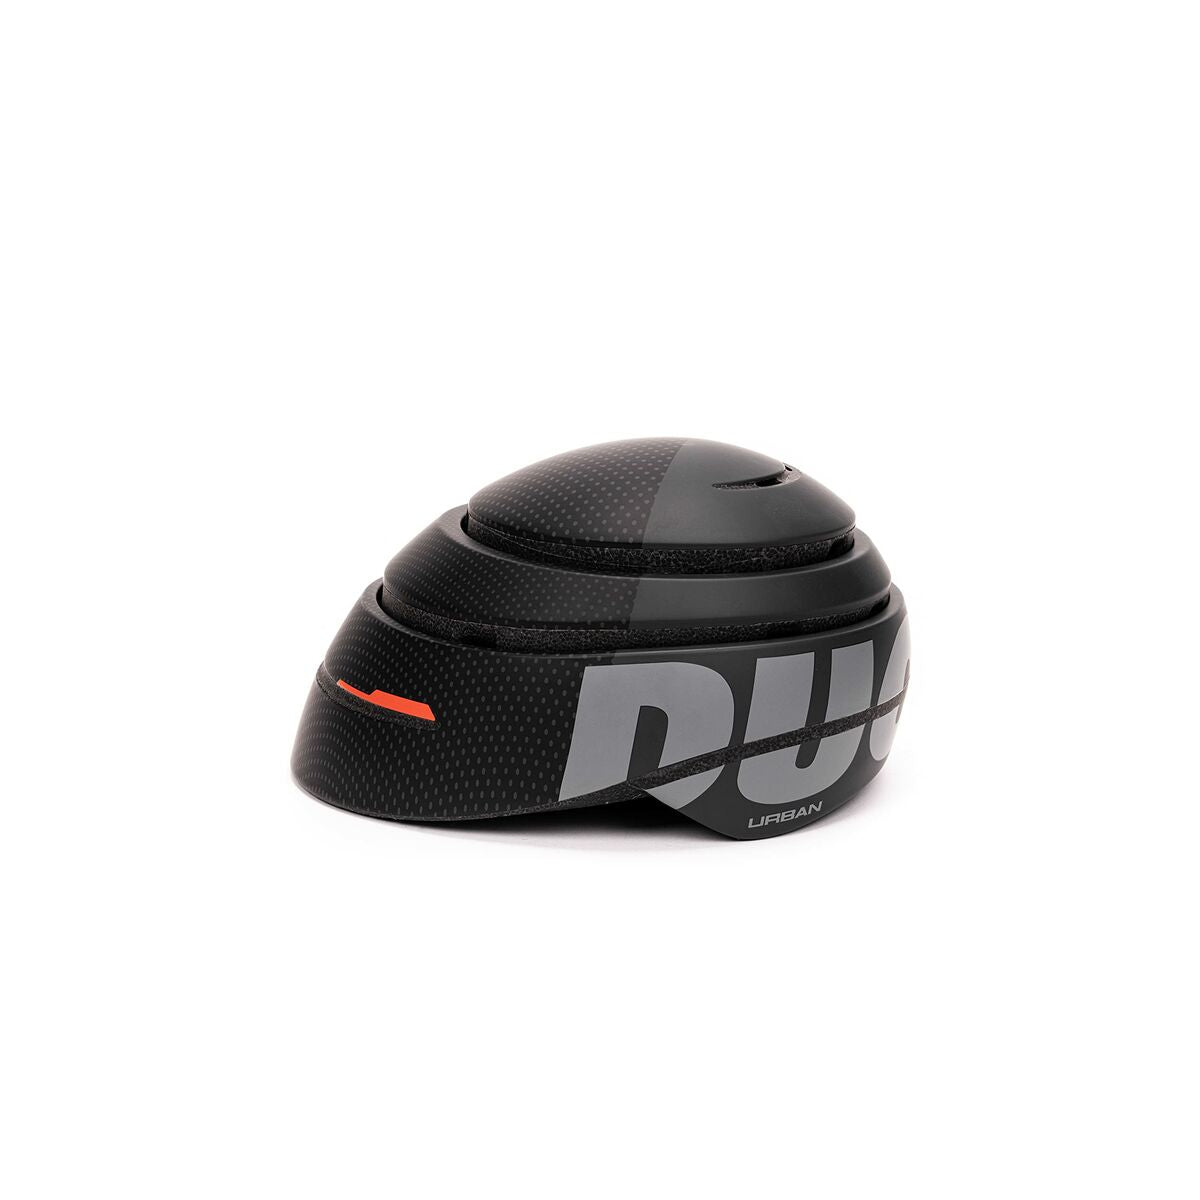 Kaufe Helm für Elektroroller Ducati DUC-HLM-FLD/L Schwarz bei AWK Flagship um € 113.00